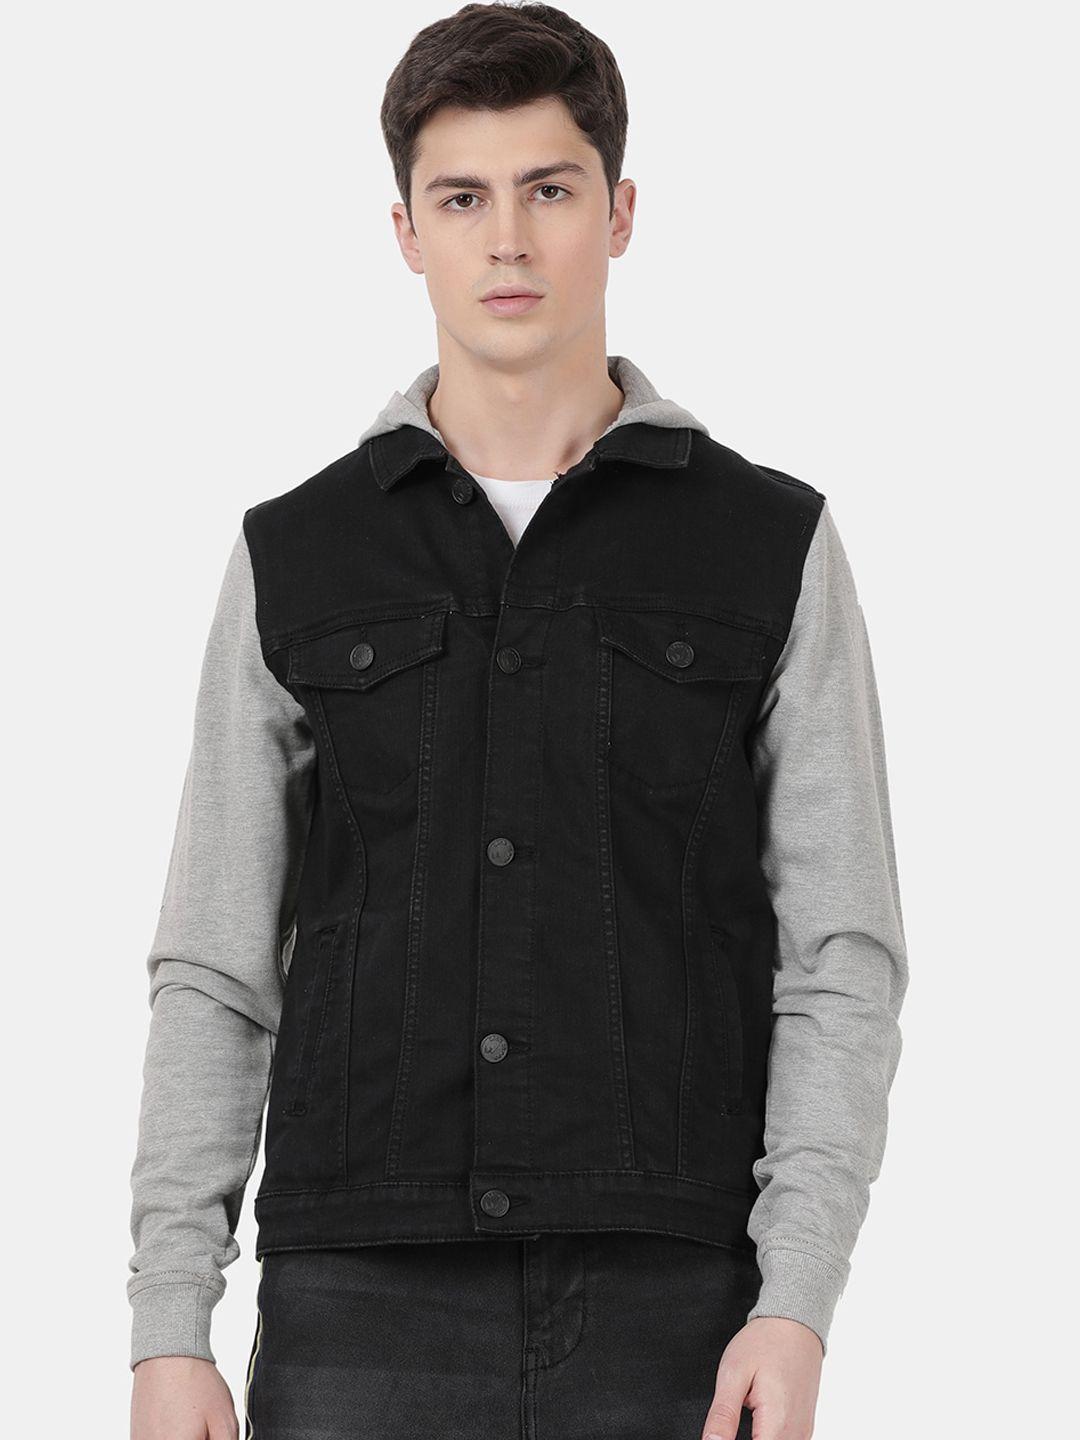 llak jeans men black & grey solid cotton hooded denim jacket